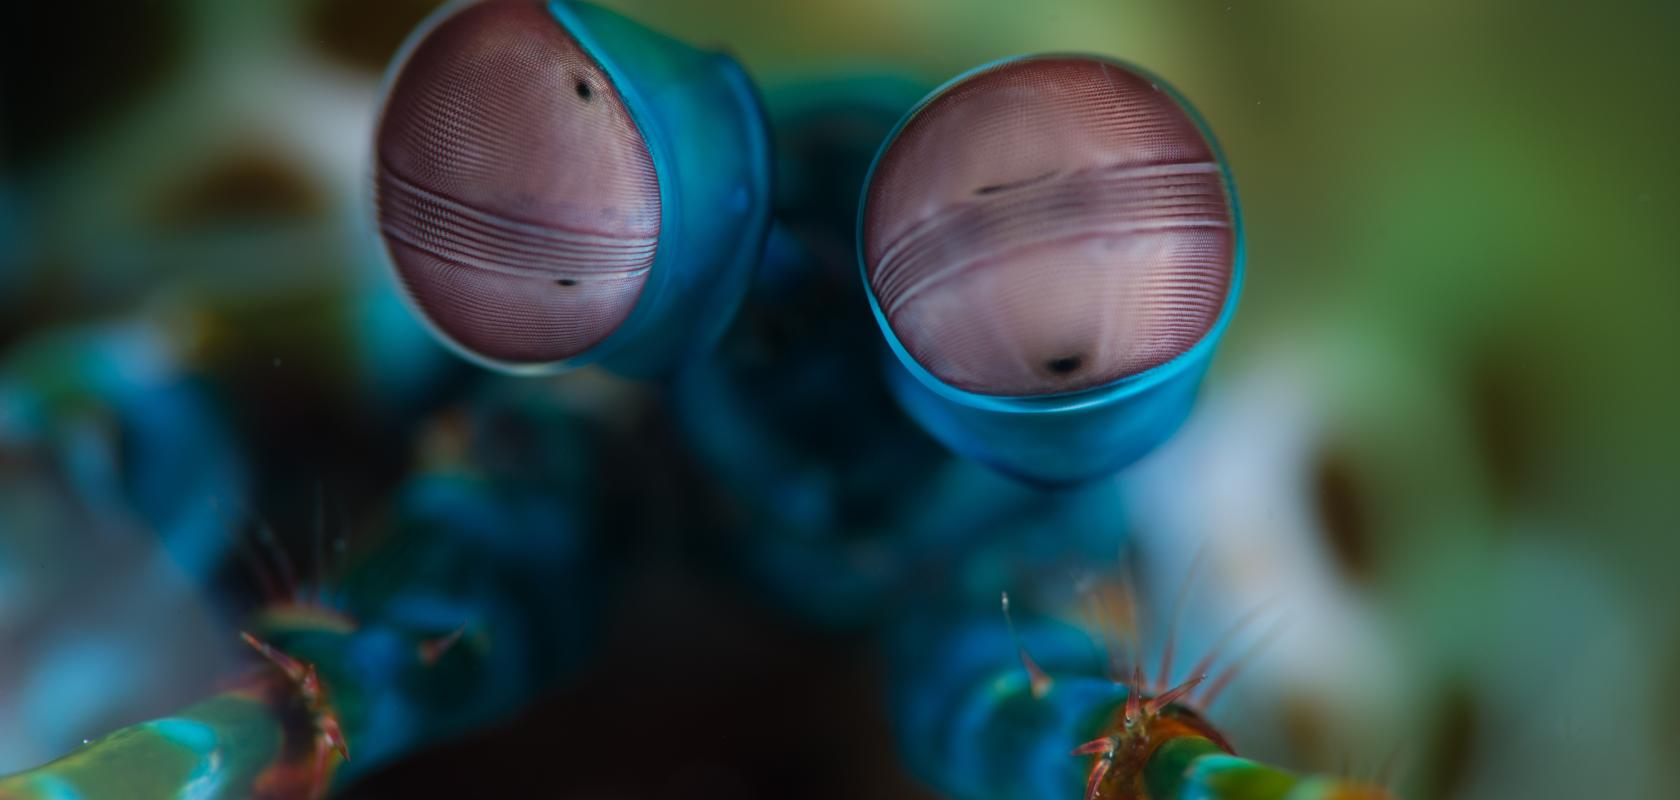 Mantis shrimp eye polarimetric image sensor